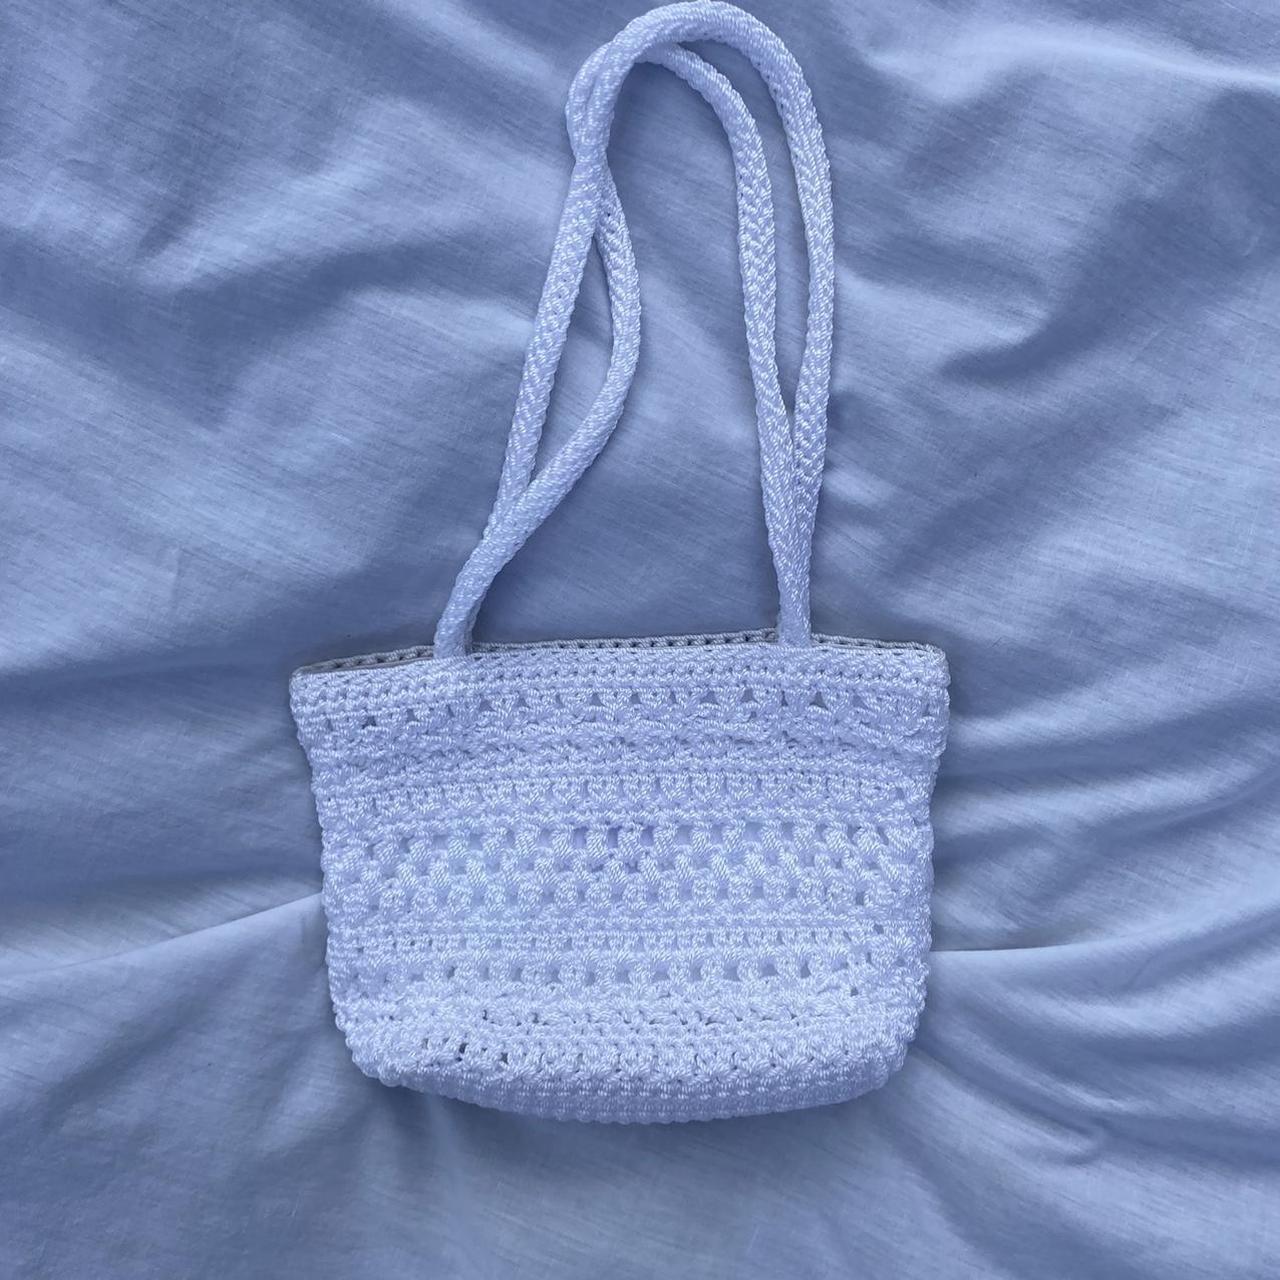 Product Image 1 - White woven handbag

Brand: Lina

Era: 2000s

Style/aesthetic: